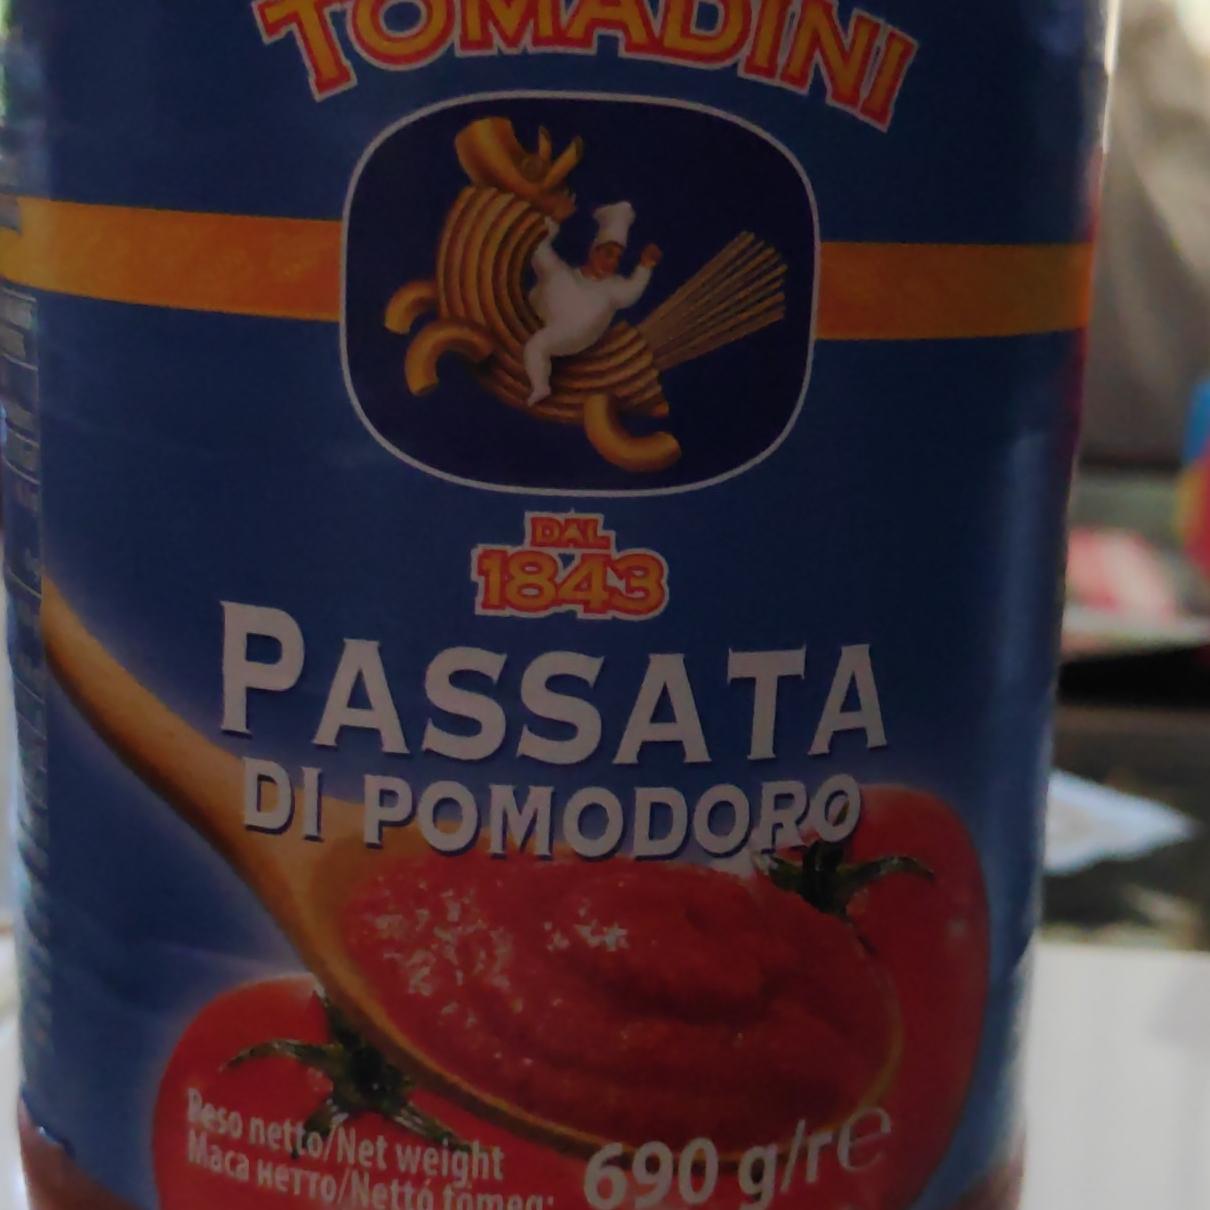 Фото - Томаты в собственном соку passata di pomodoro Luigi Tomadini